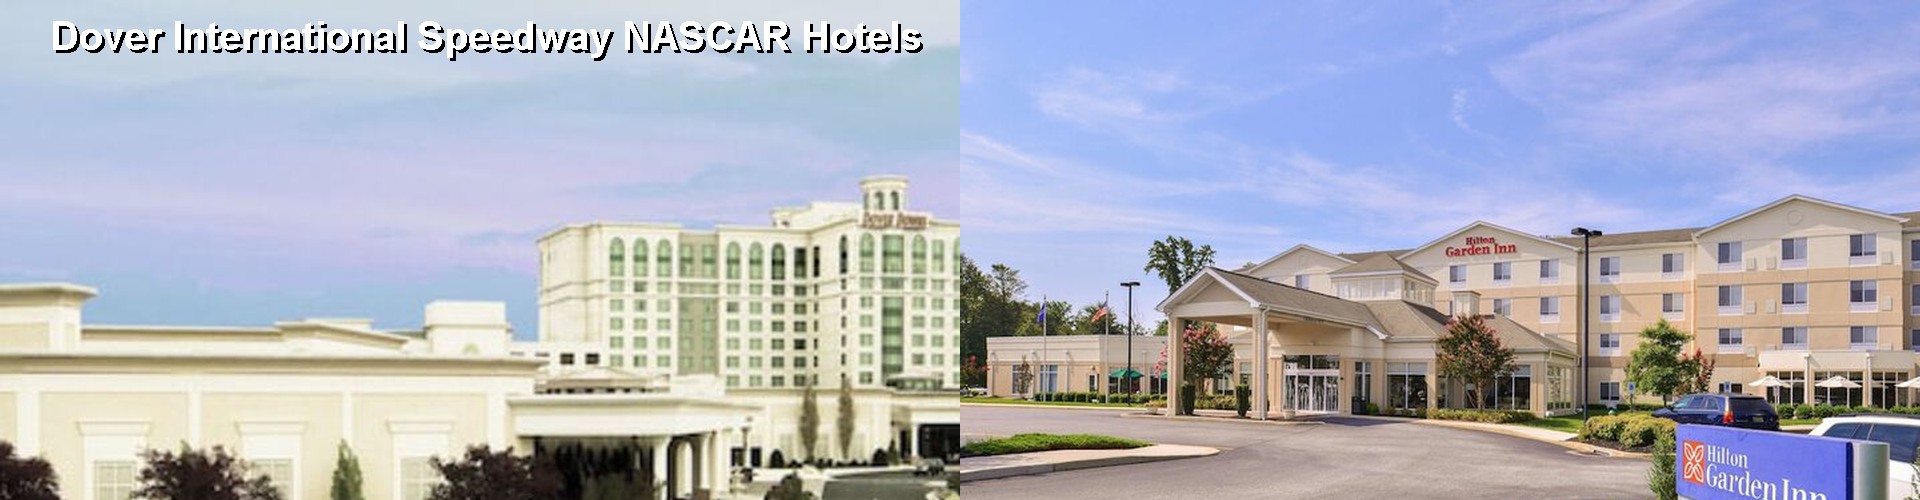 5 Best Hotels near Dover International Speedway NASCAR